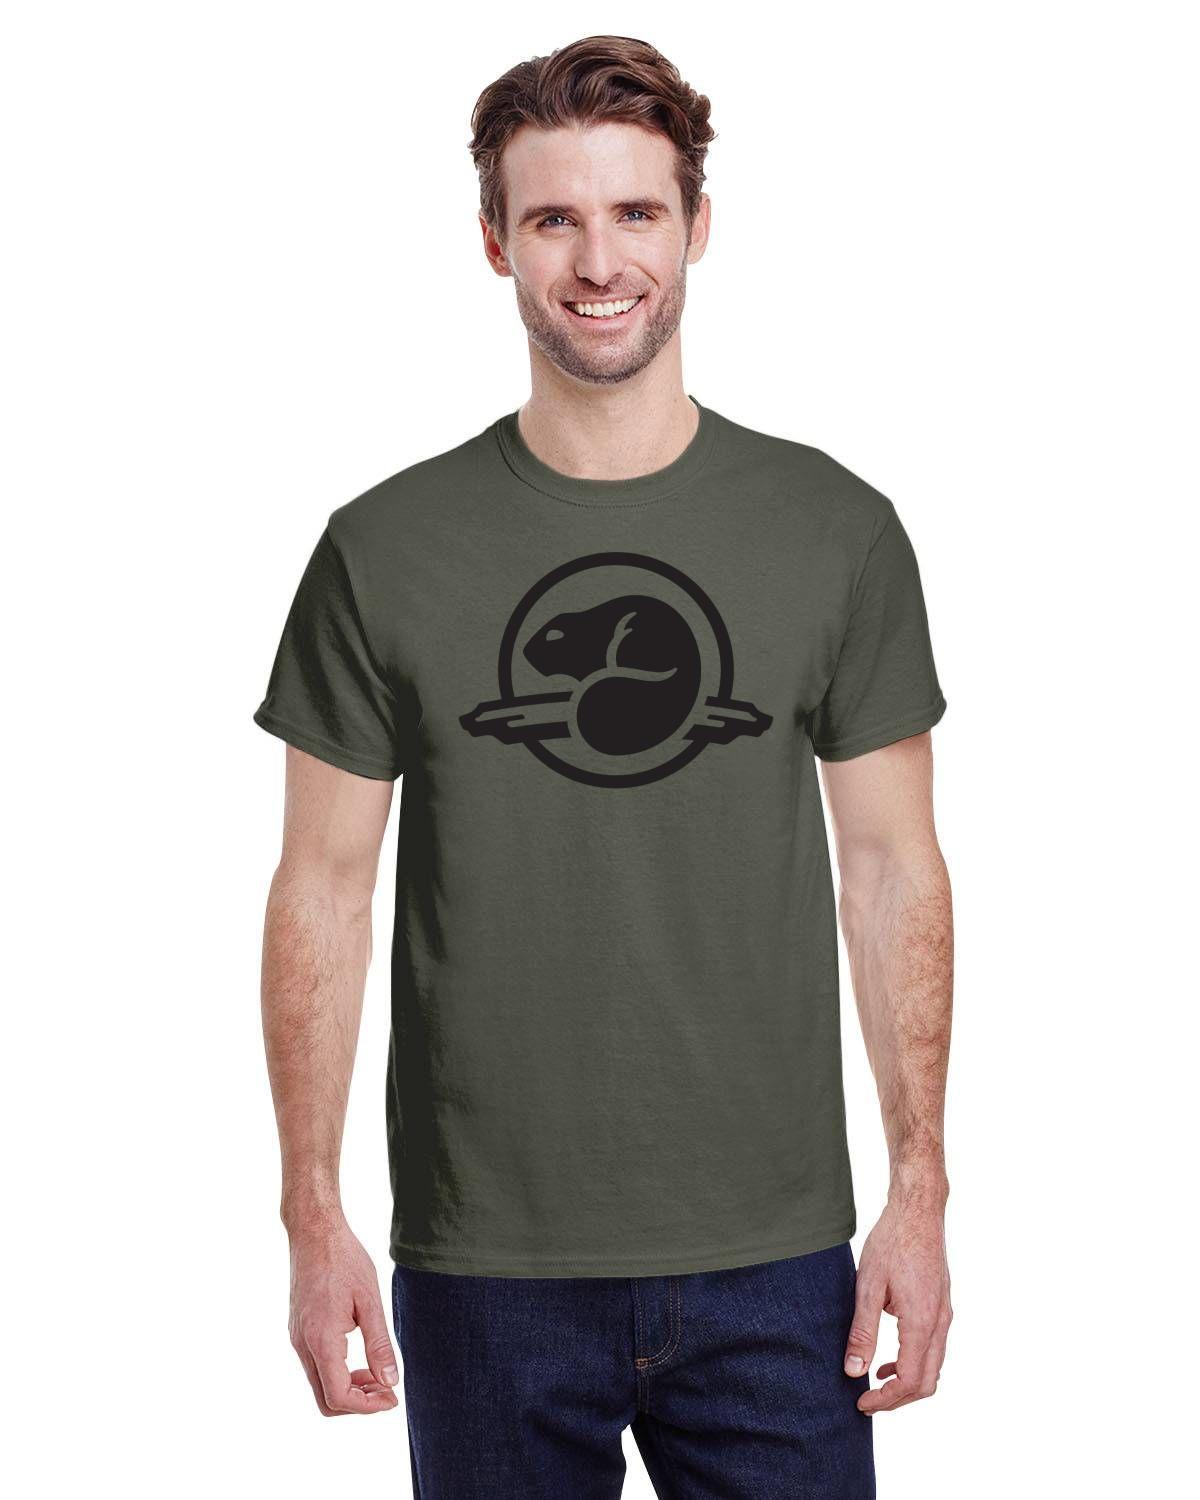 Parks Canada Beaver Non Distressed Logo T-Shirt, Canadian Heritage, Canadian Nostalgia Shirt